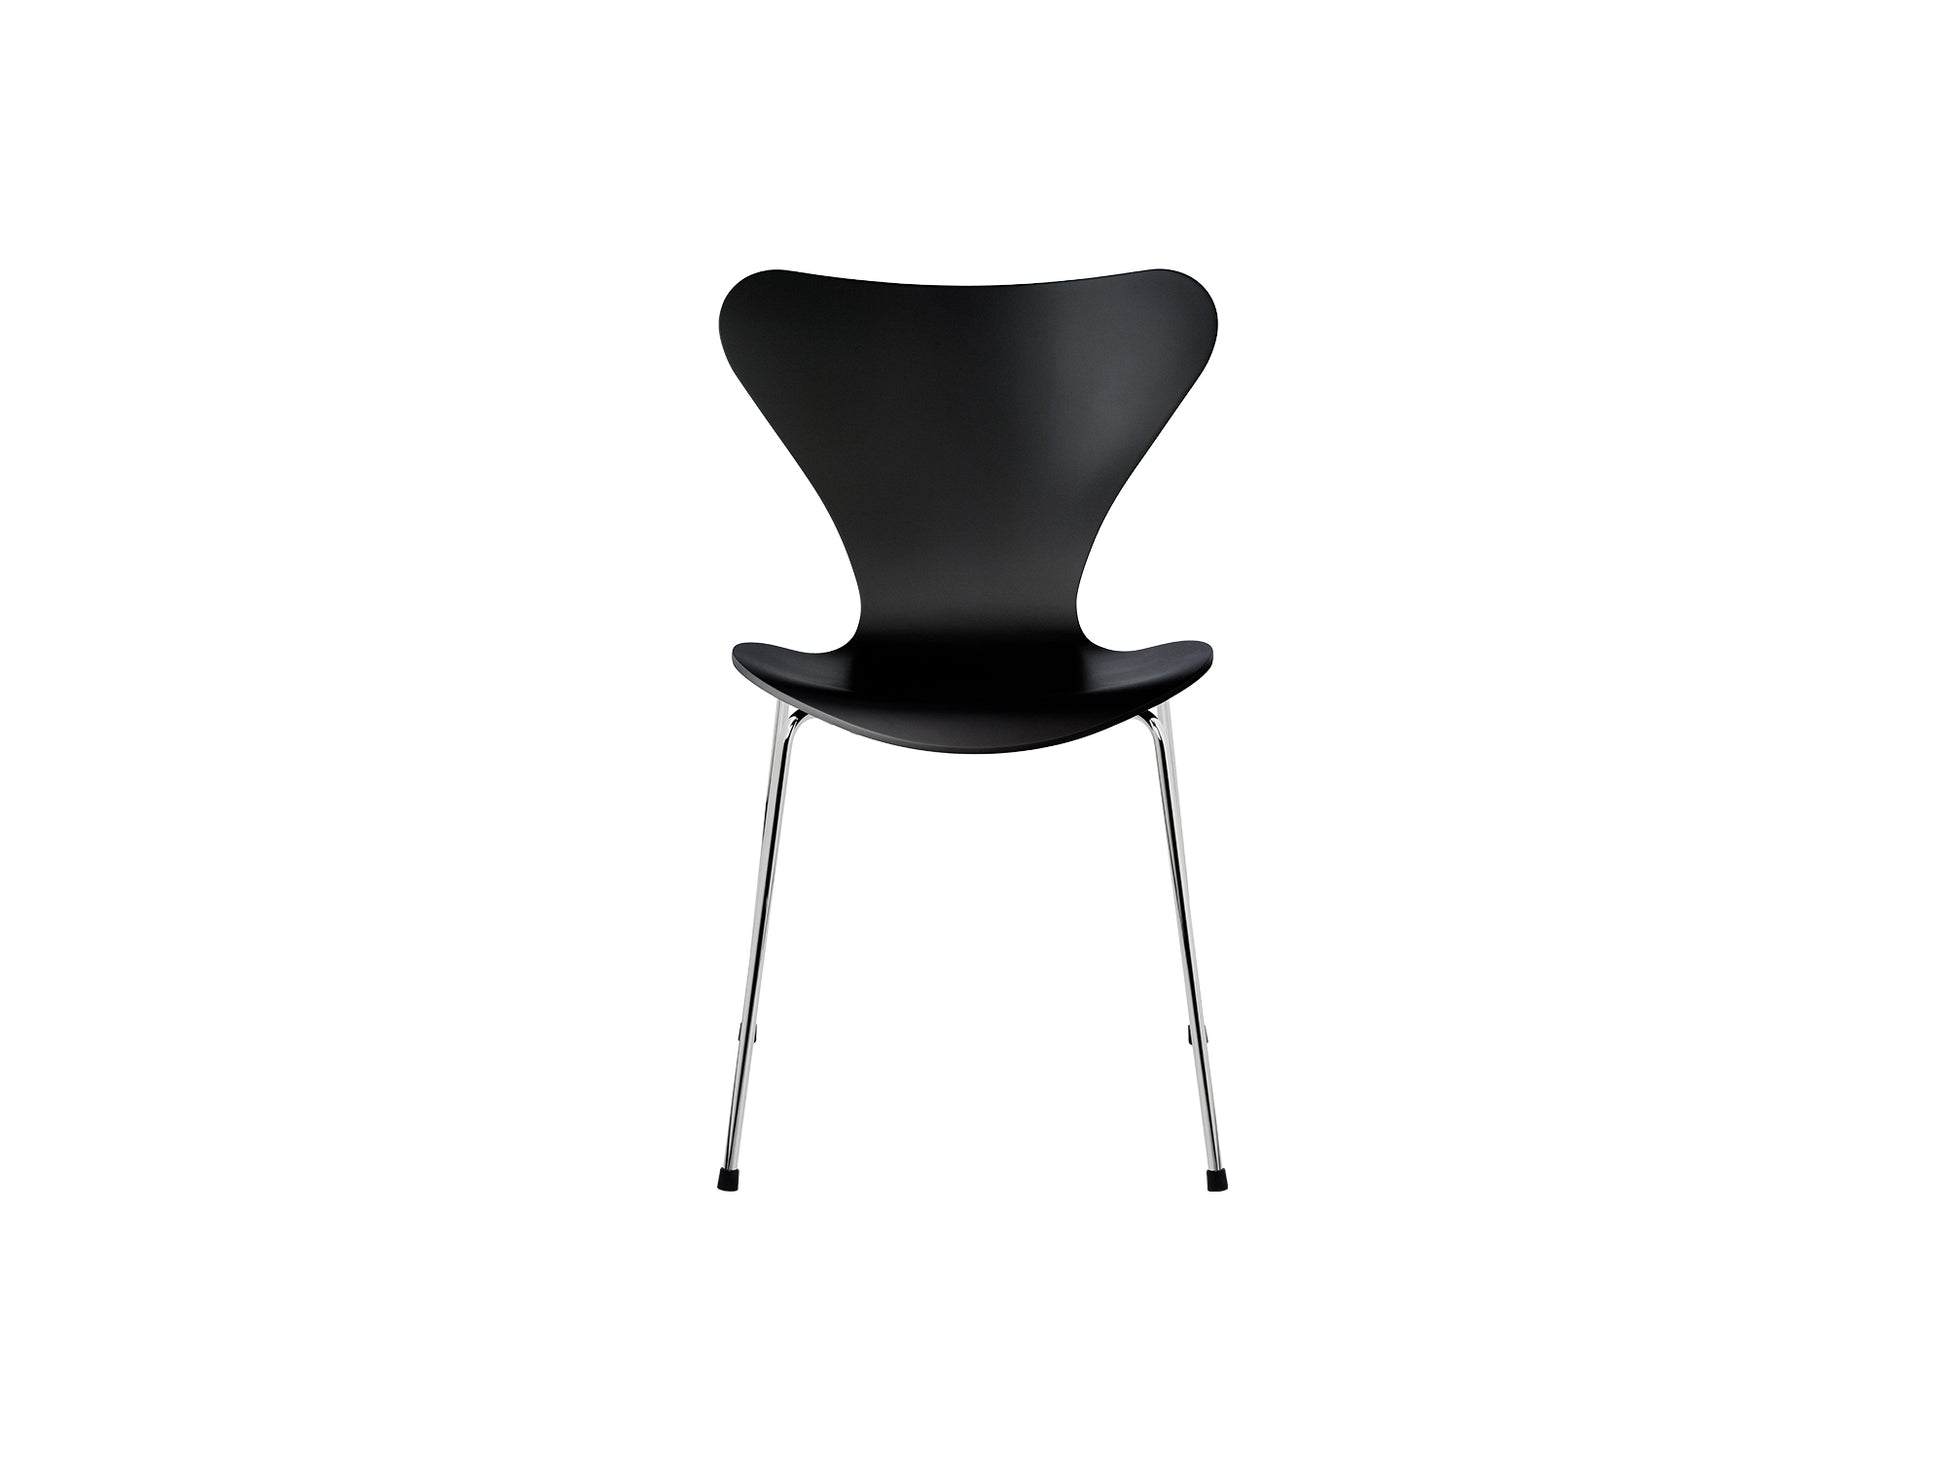 Series 7™ 3107 Dining Chair by Fritz Hansen - Black Lacquered Veneer Shell / Chromed Steel